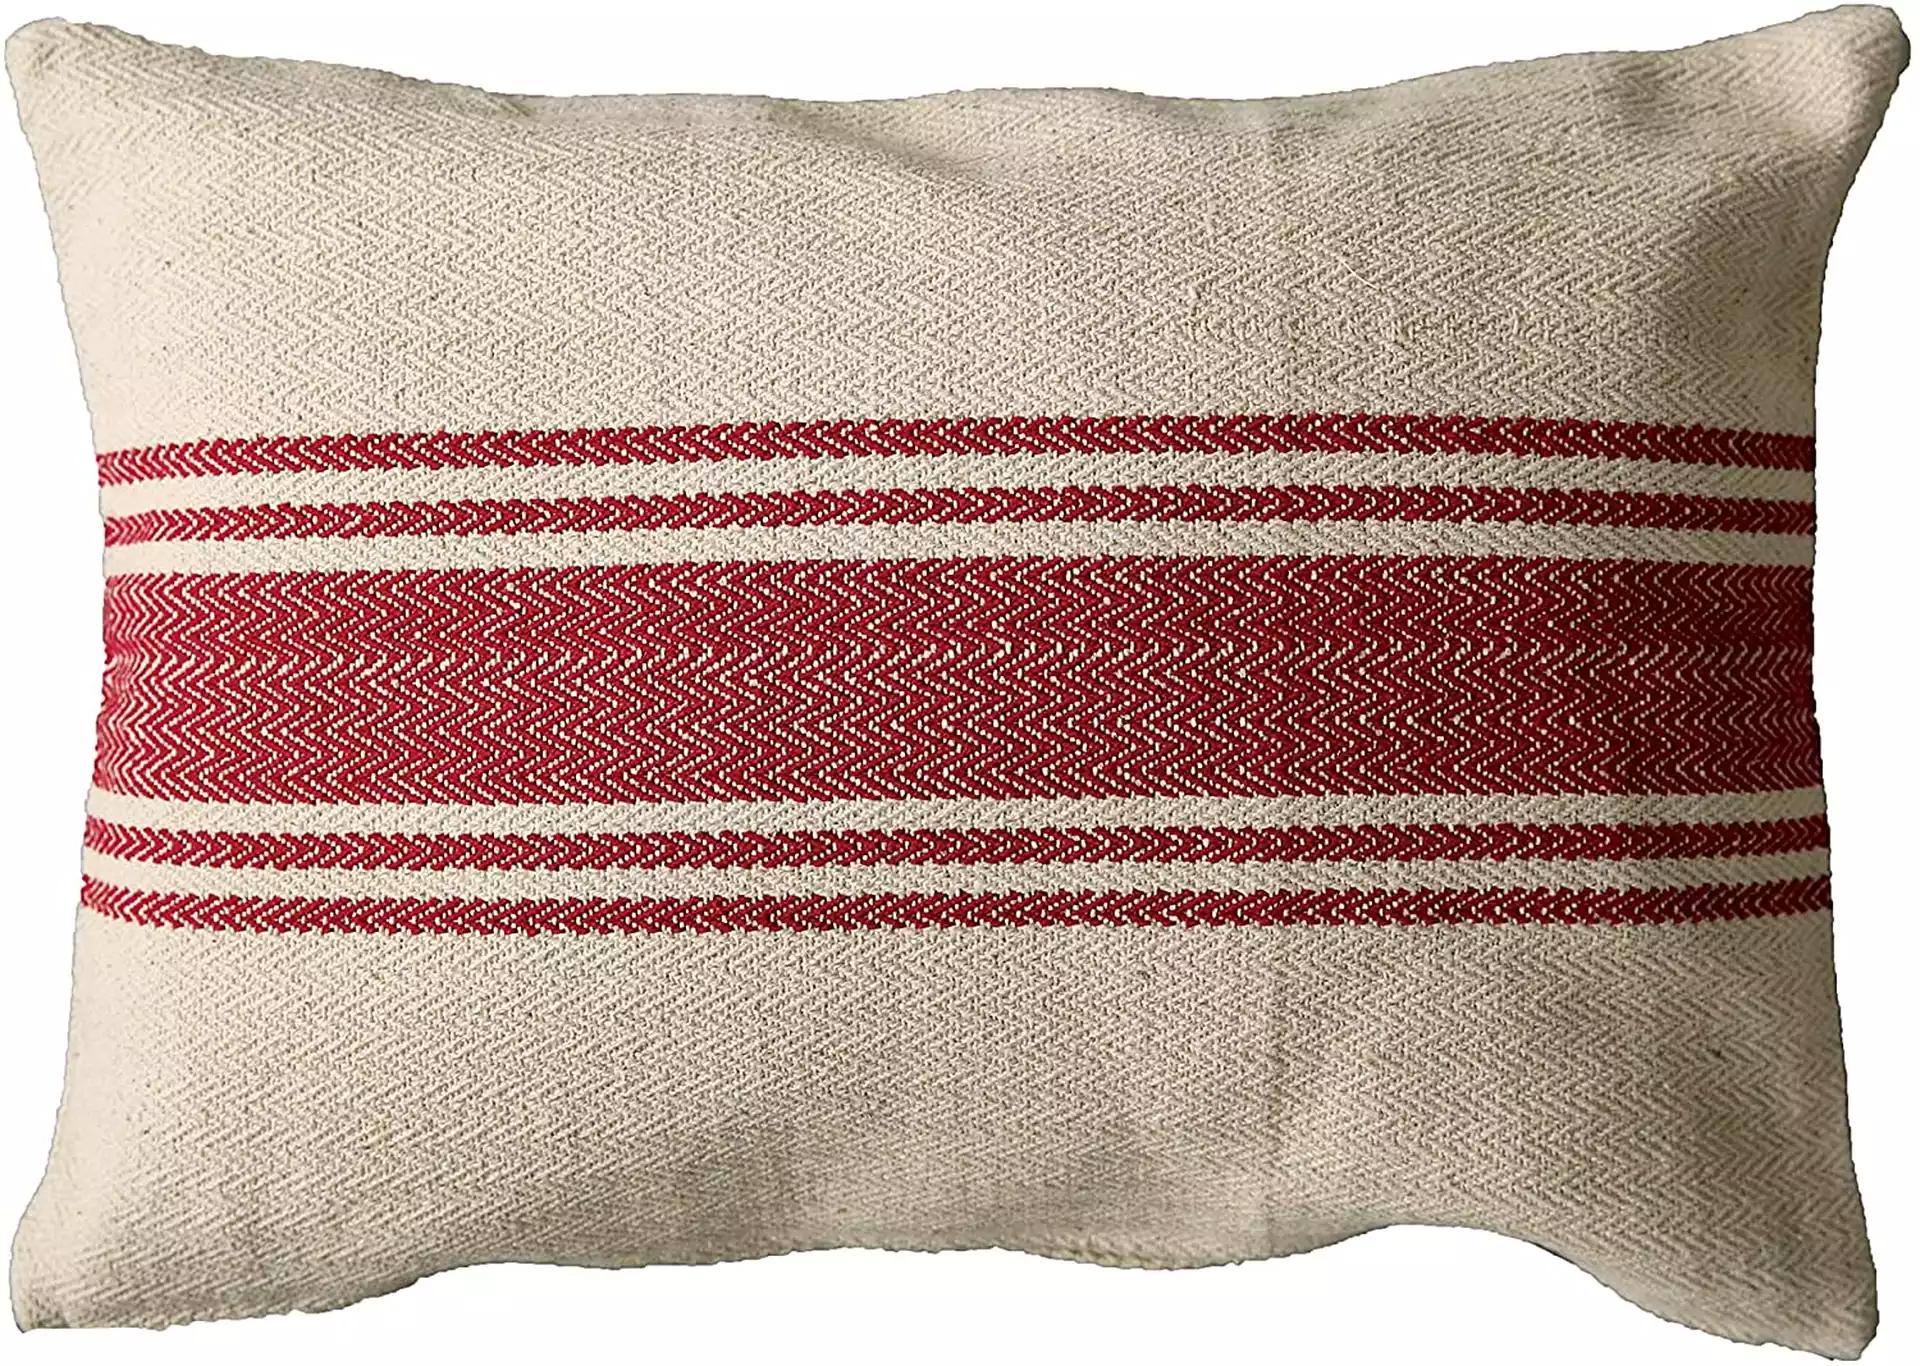 Cream Cotton Canvas Lumbar Pillow, Red, 20" x 14"